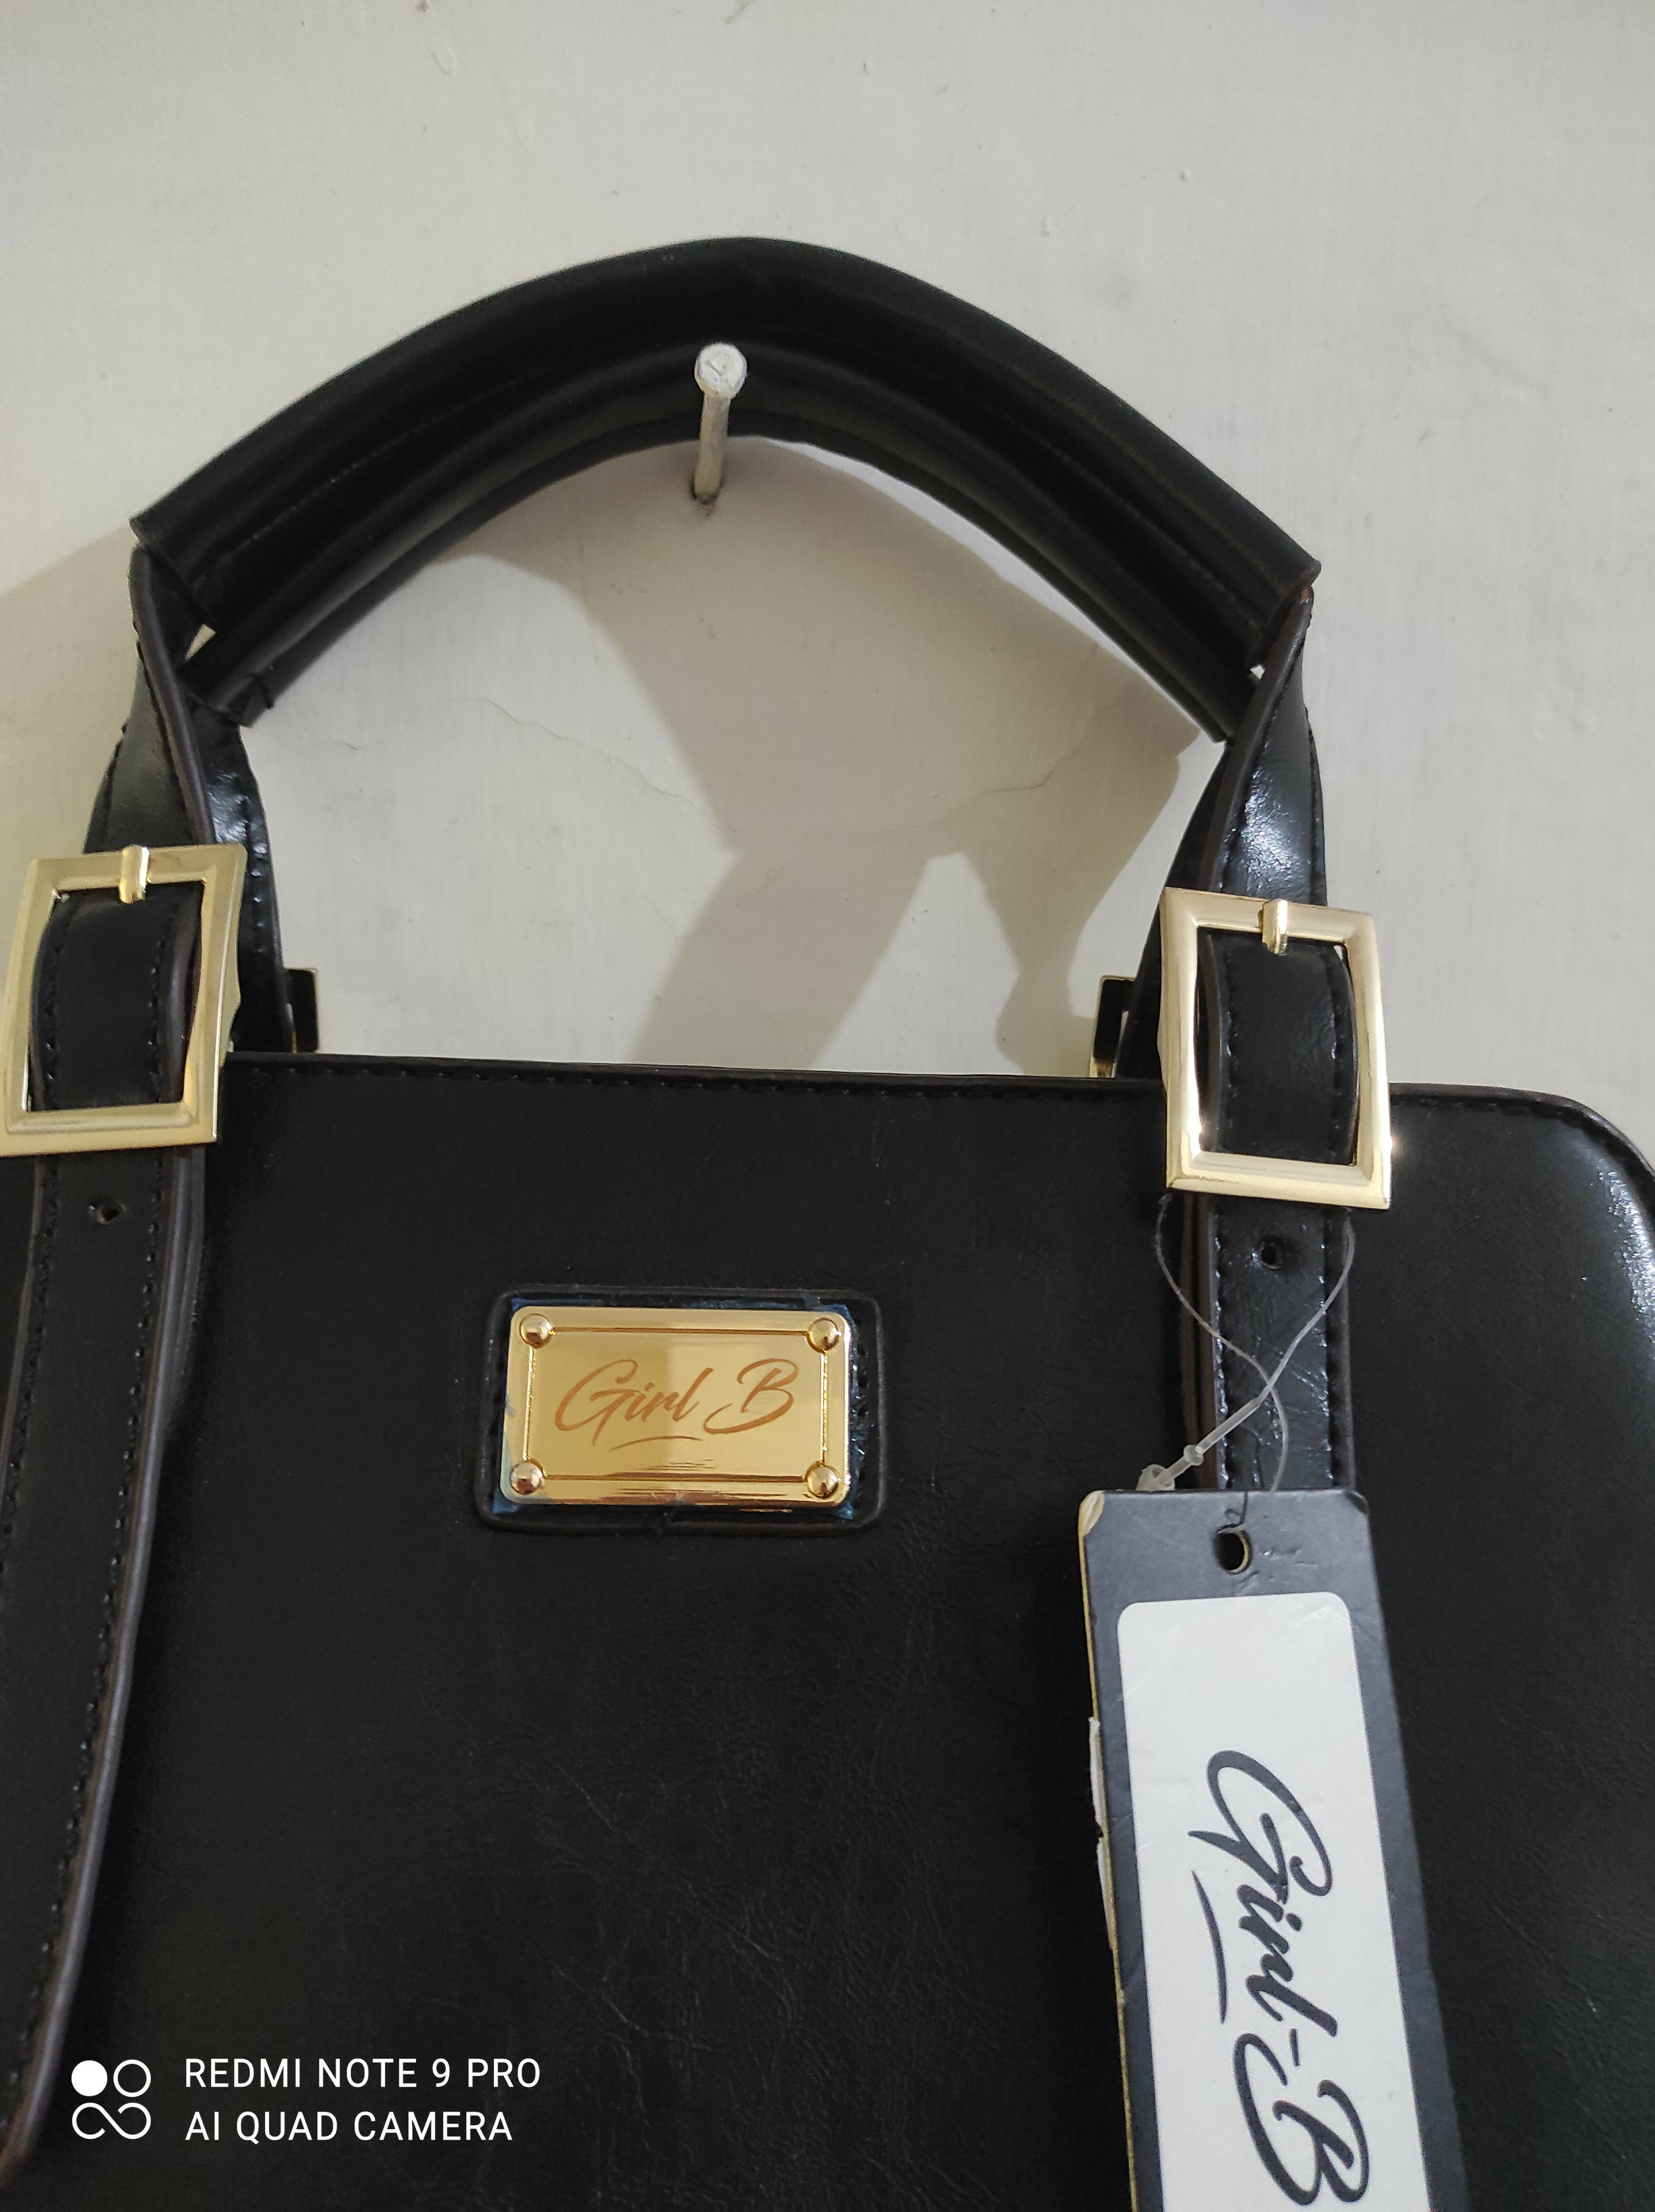 Borjan | Pure Leather Hand Bag | Women Bags | Brand New